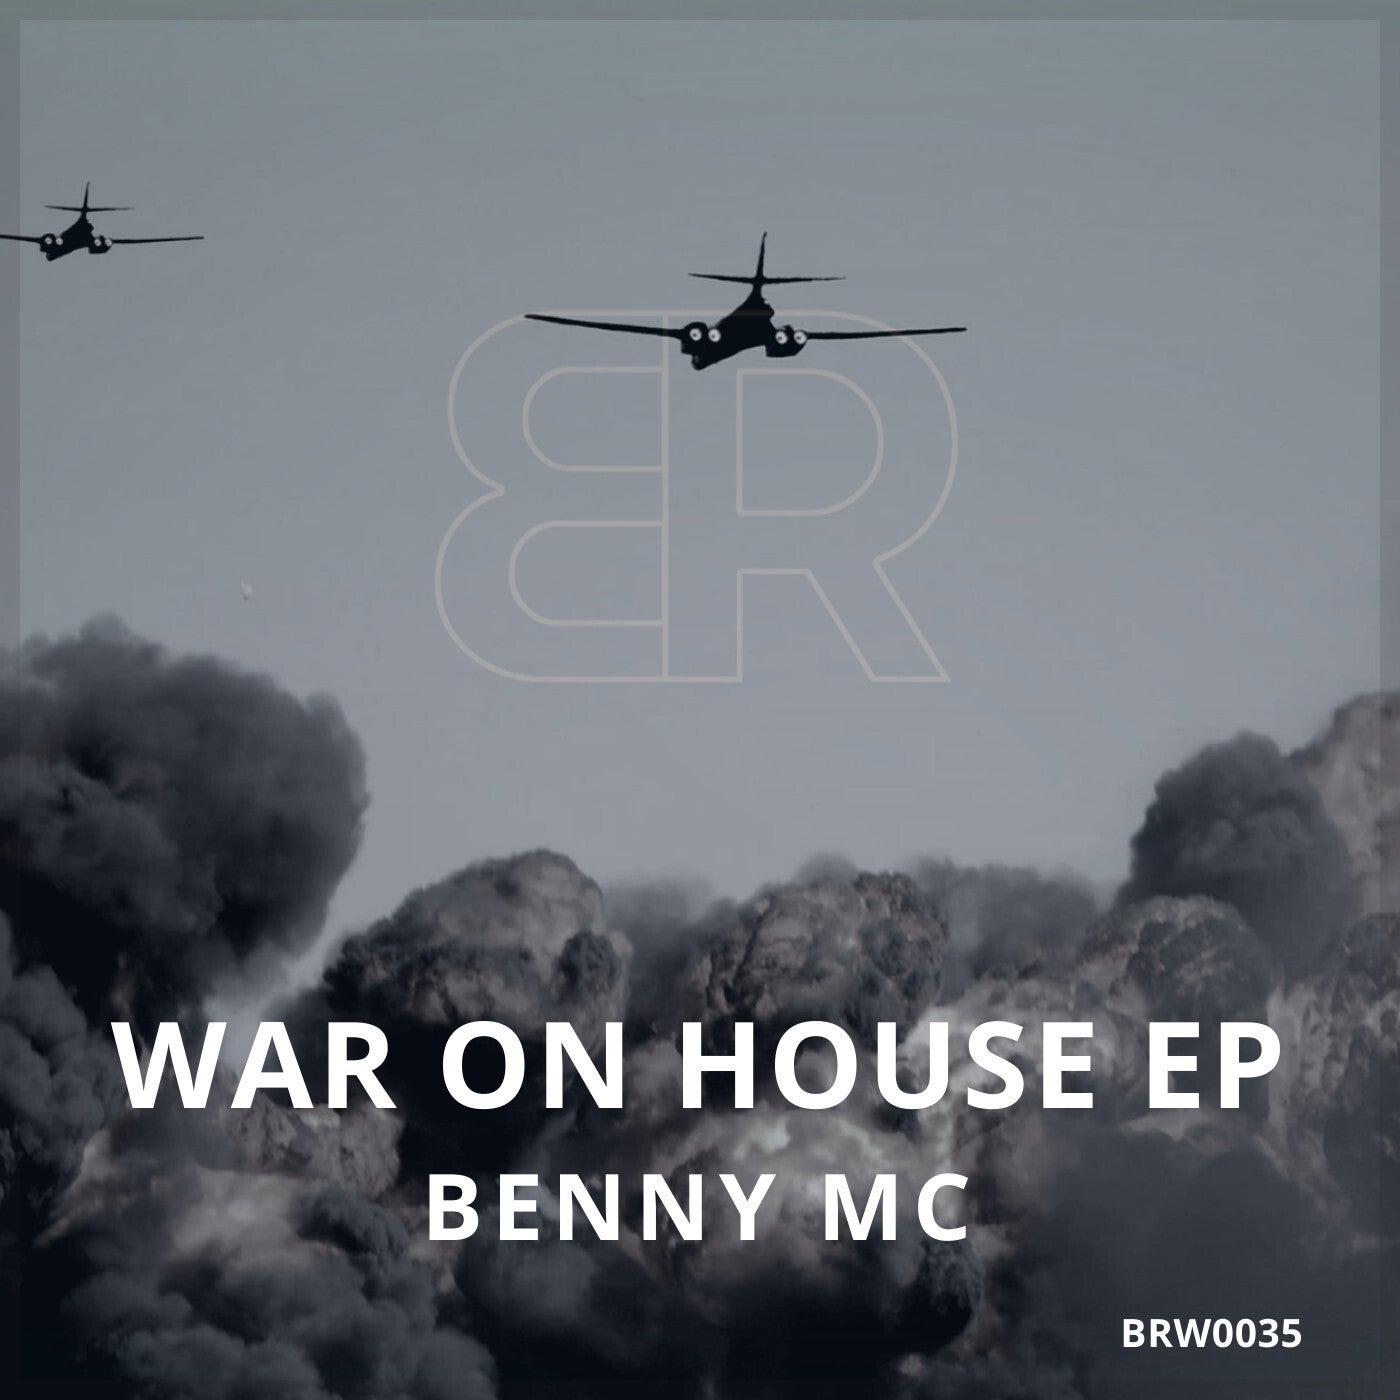 Benny Mc – War on House EP [BRW0035]